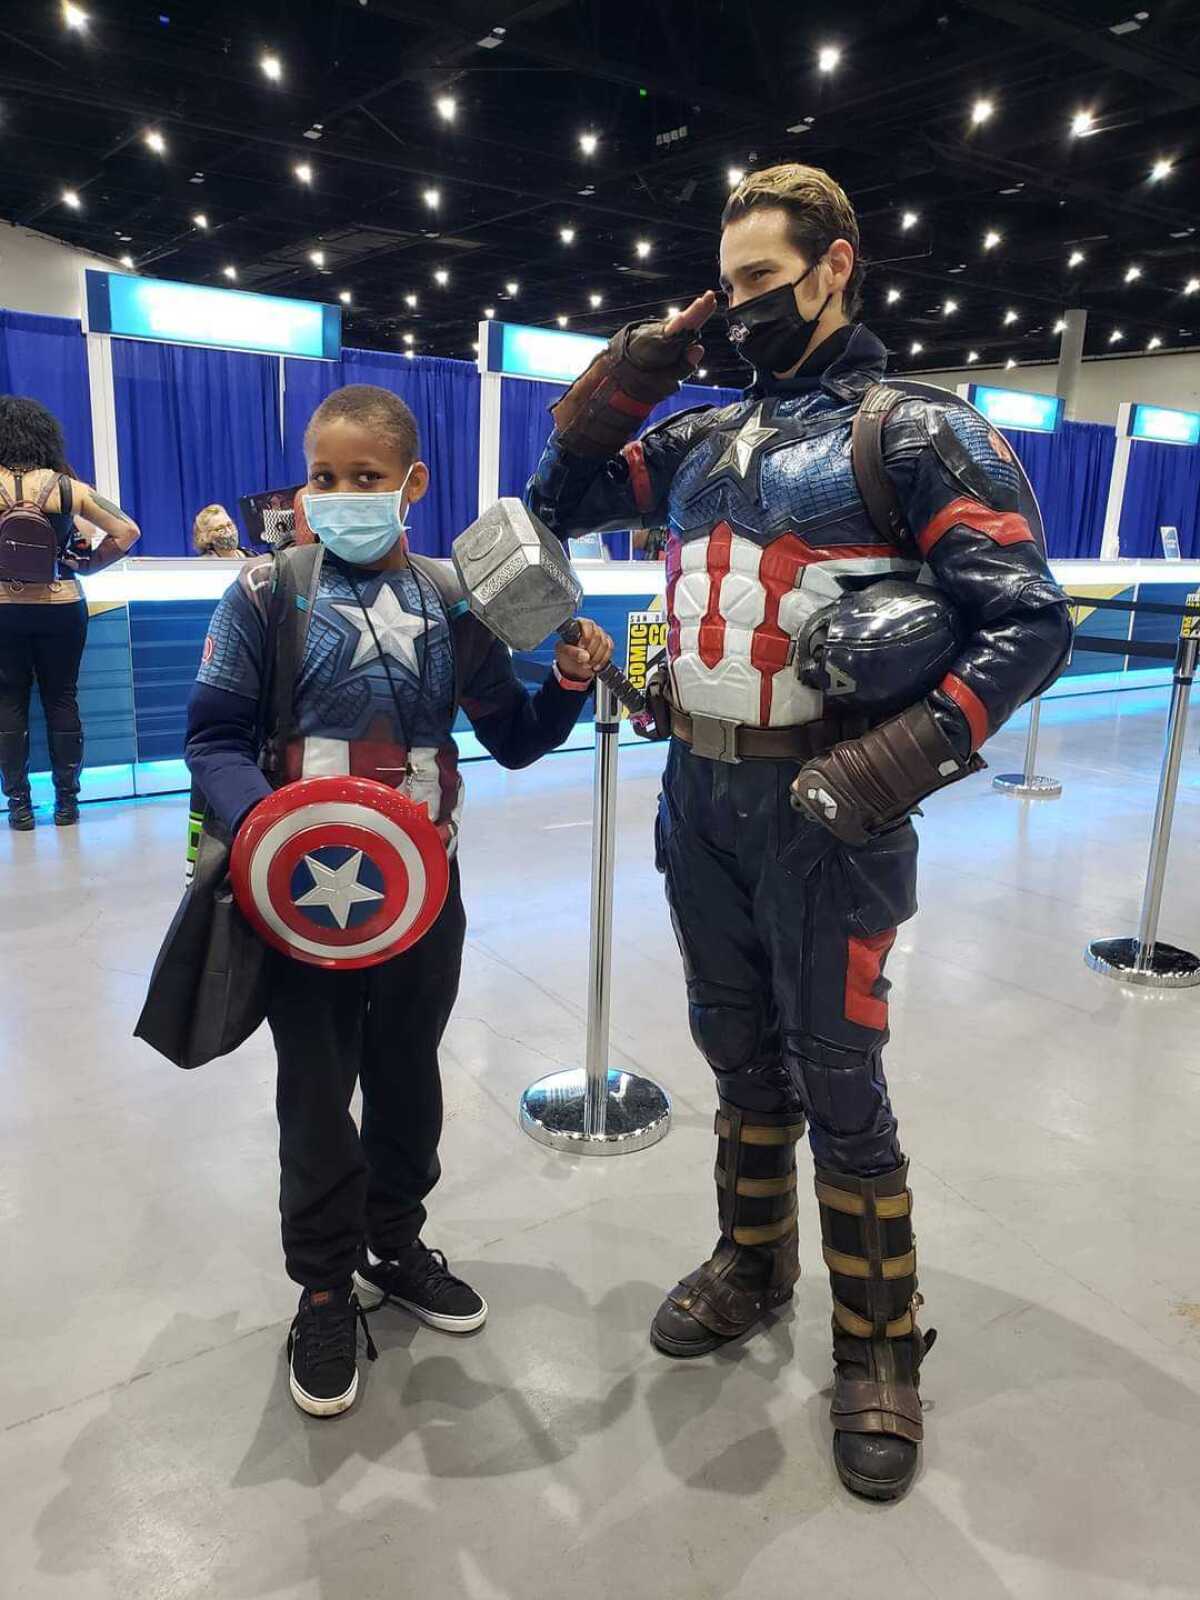 Trenton Roberts, 13, of Oceanside meets an adult Captain America